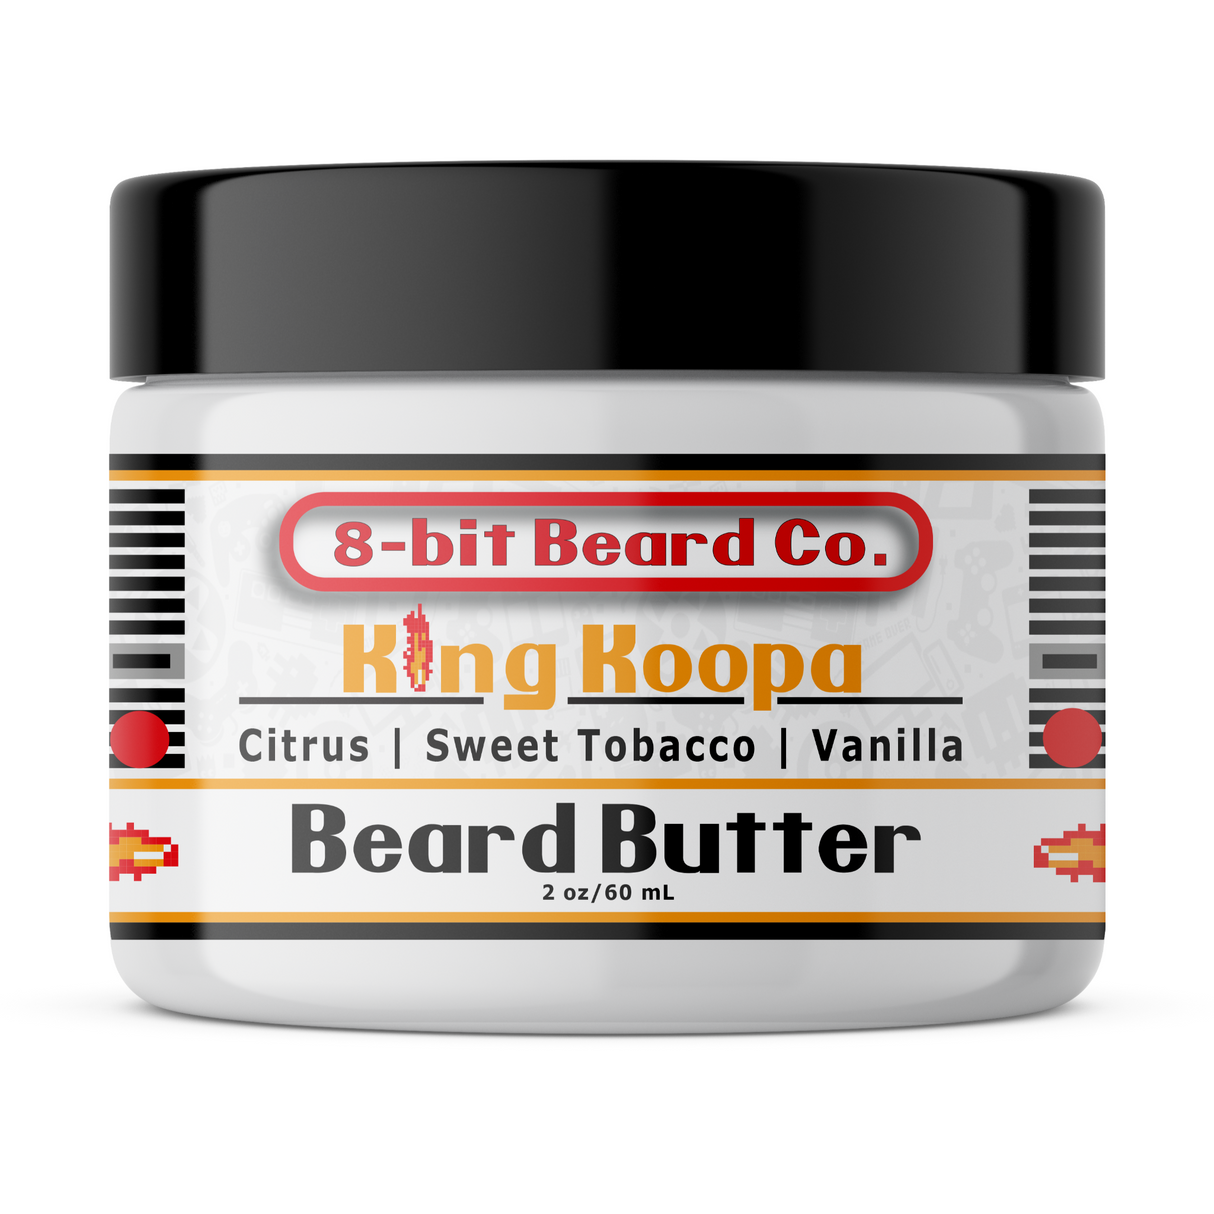 King Koopa | Beard Butter - Citrus, Sweet Tobacco, Vanilla